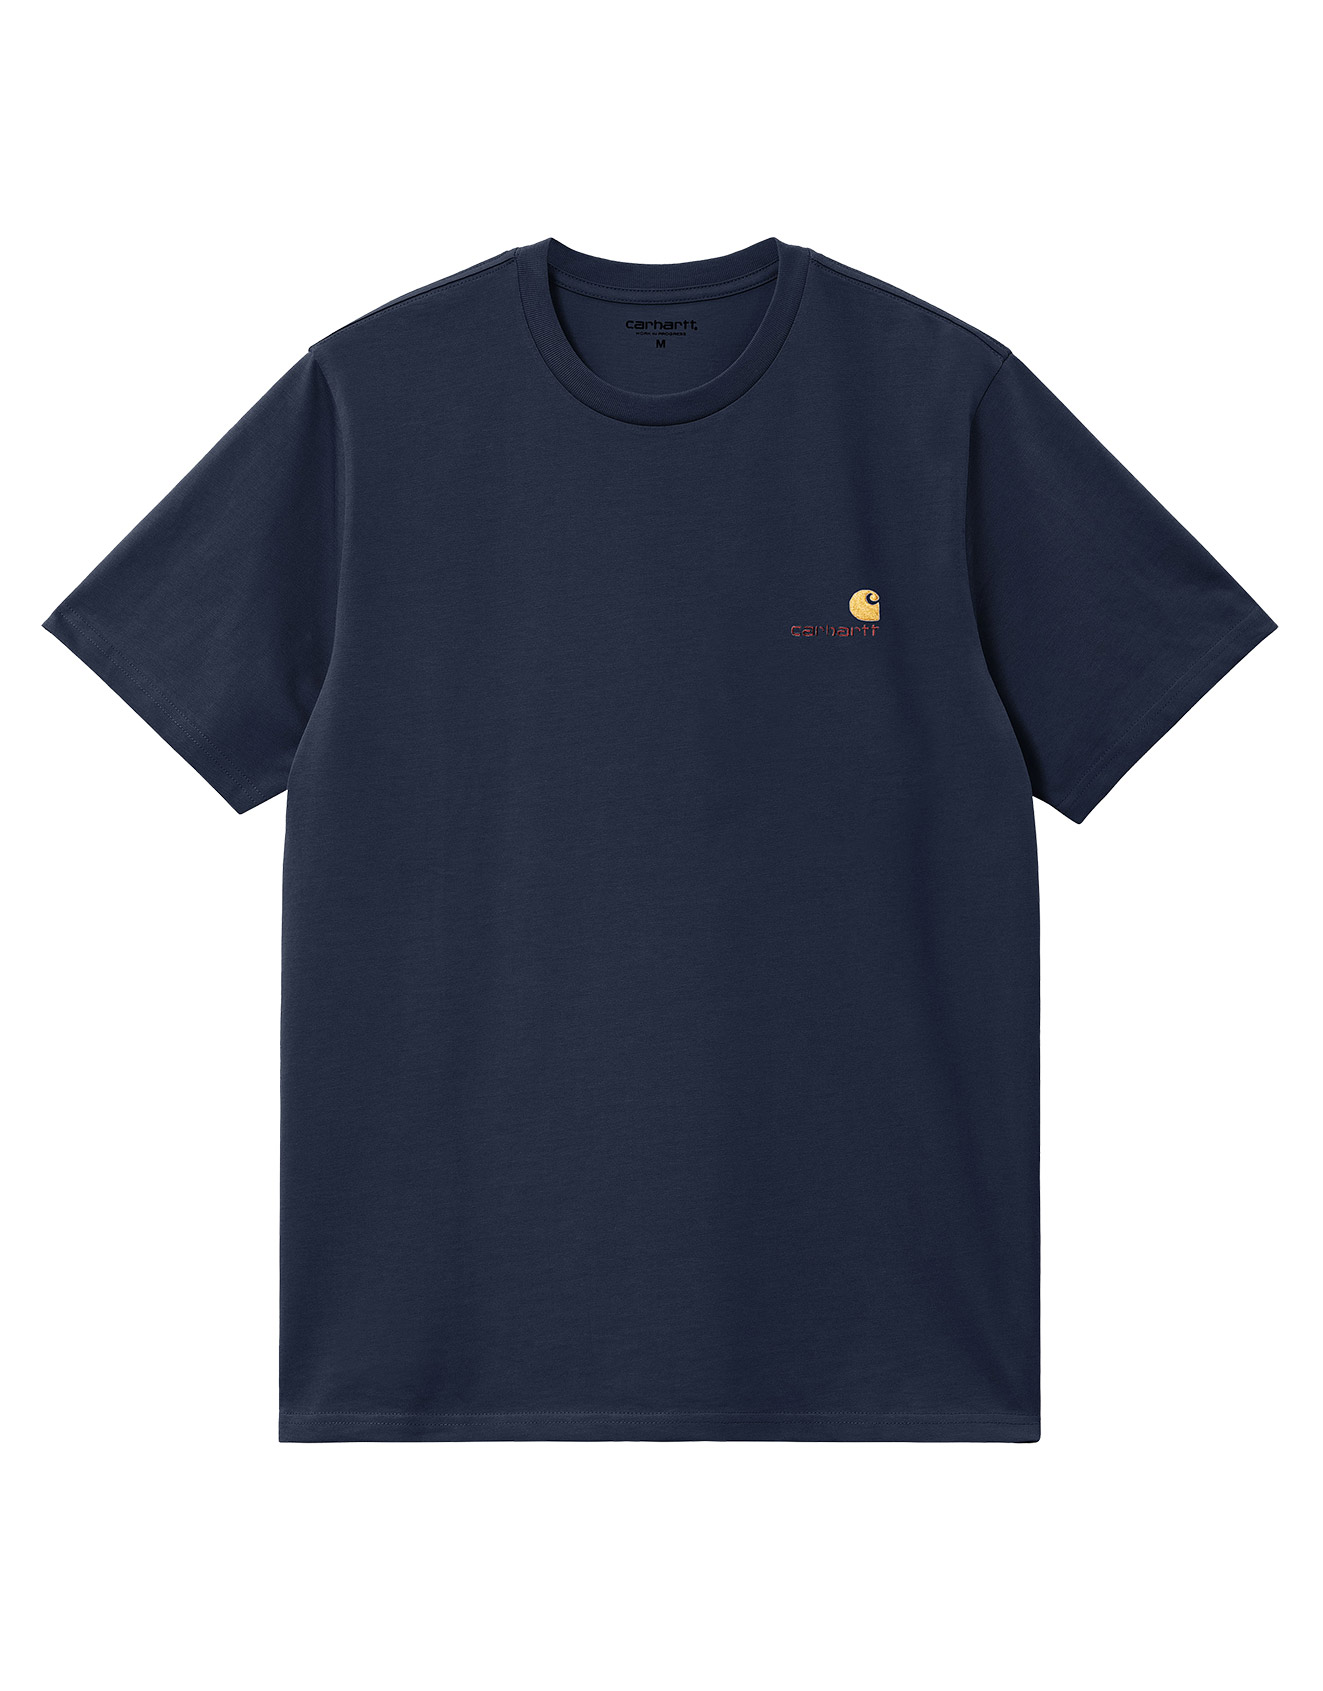 Carhartt WIP – S/S American Script T-Shirt